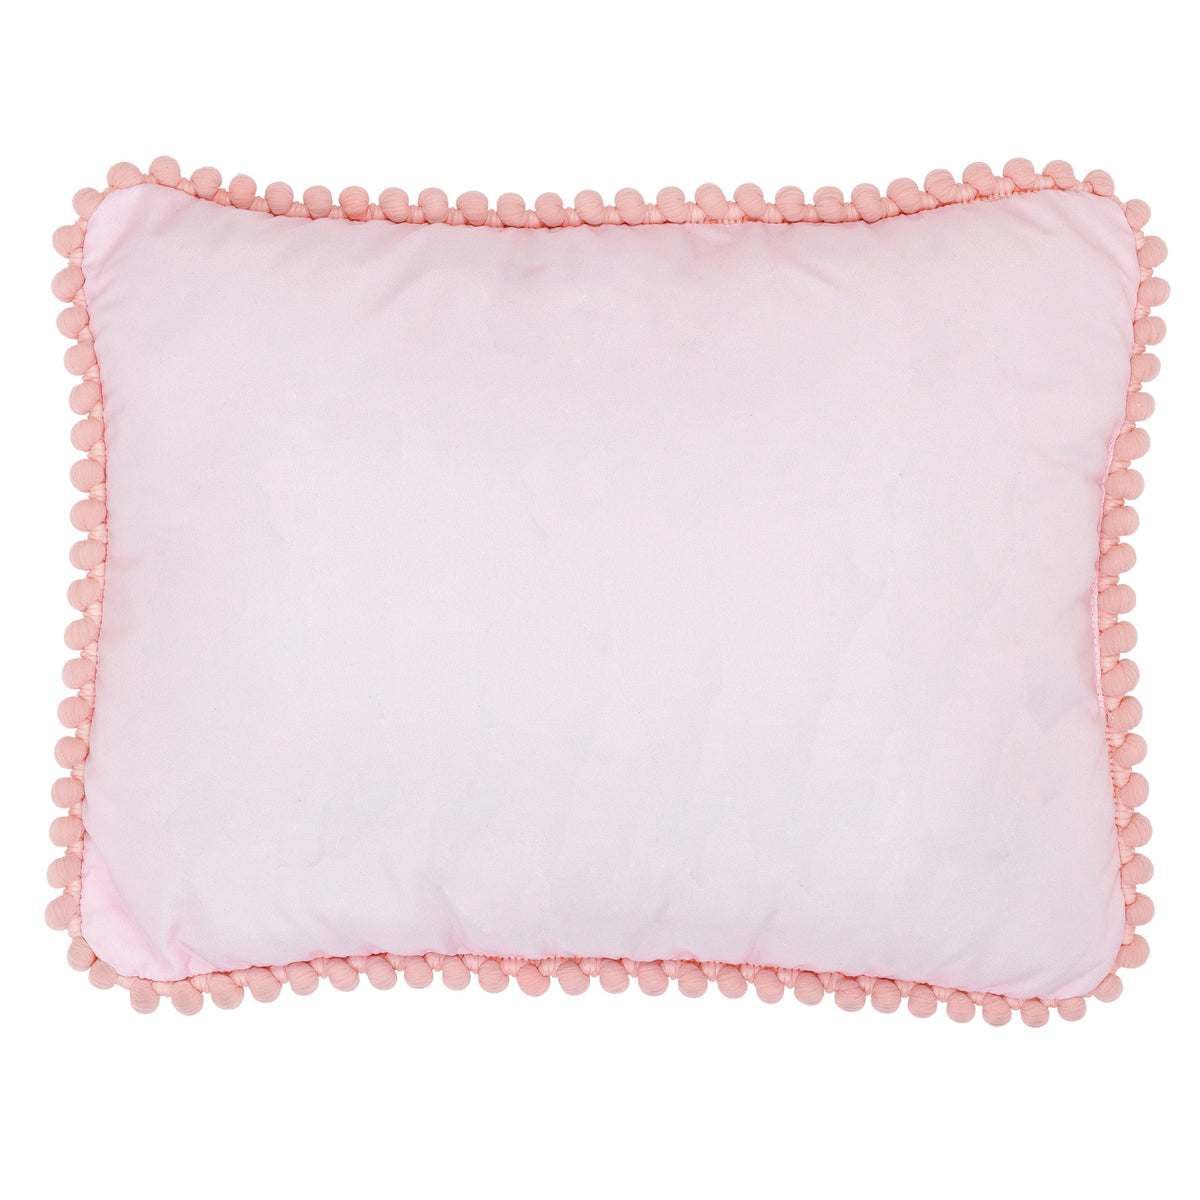 Buy Animal Kingdom Pink Matching Pillow Set for Kids Online